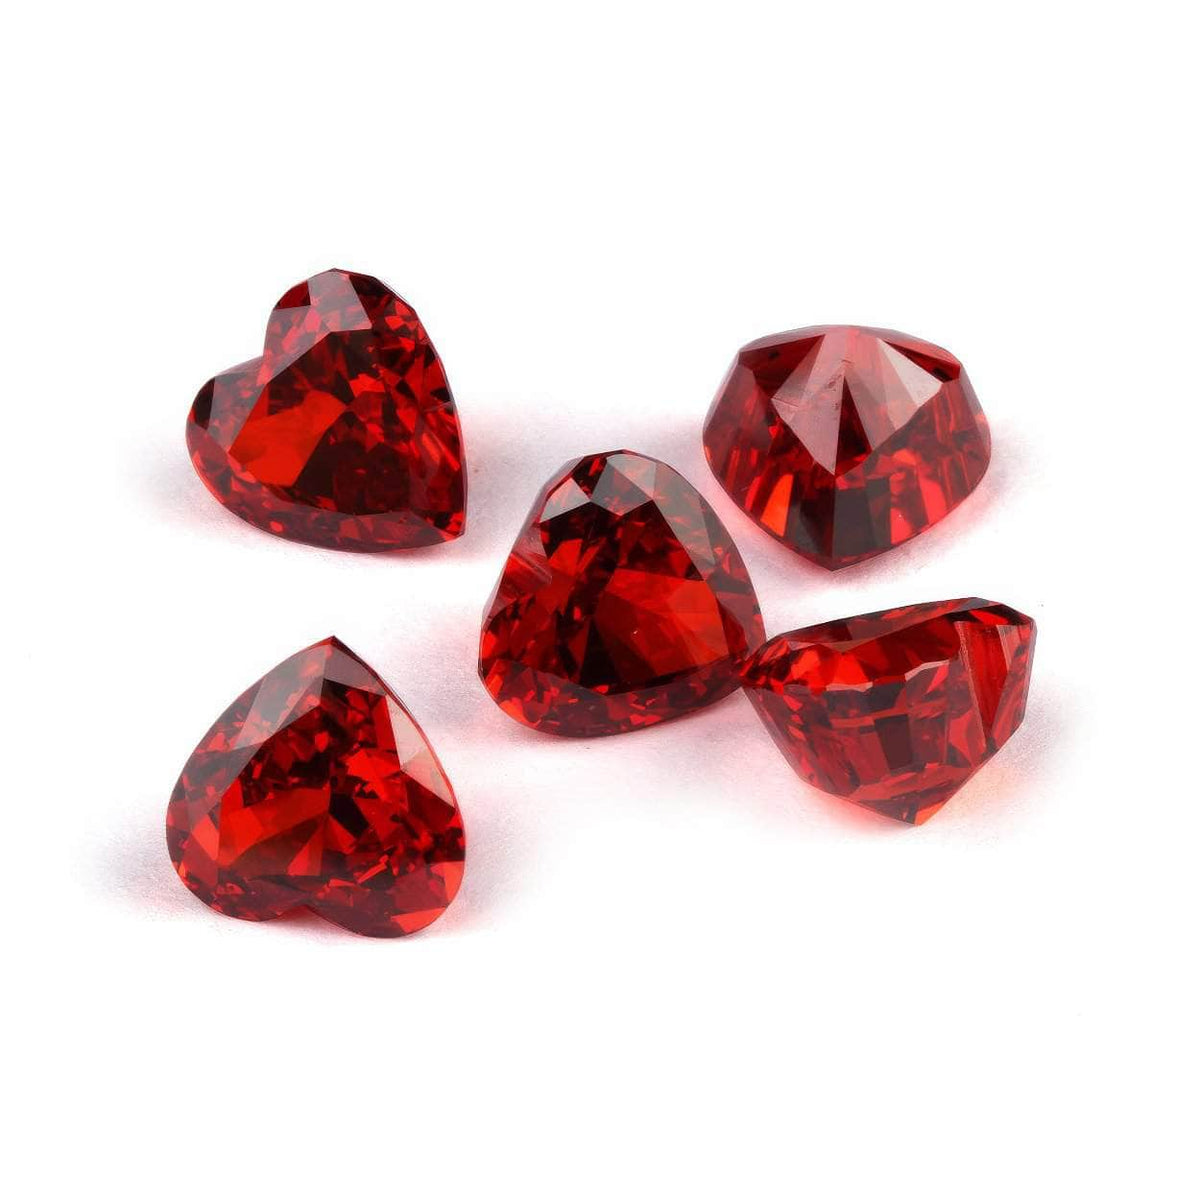 3 Set Ruby Heart Cut Lab Grown Diamond Gemstone 5*5mm / Ruby / Heart